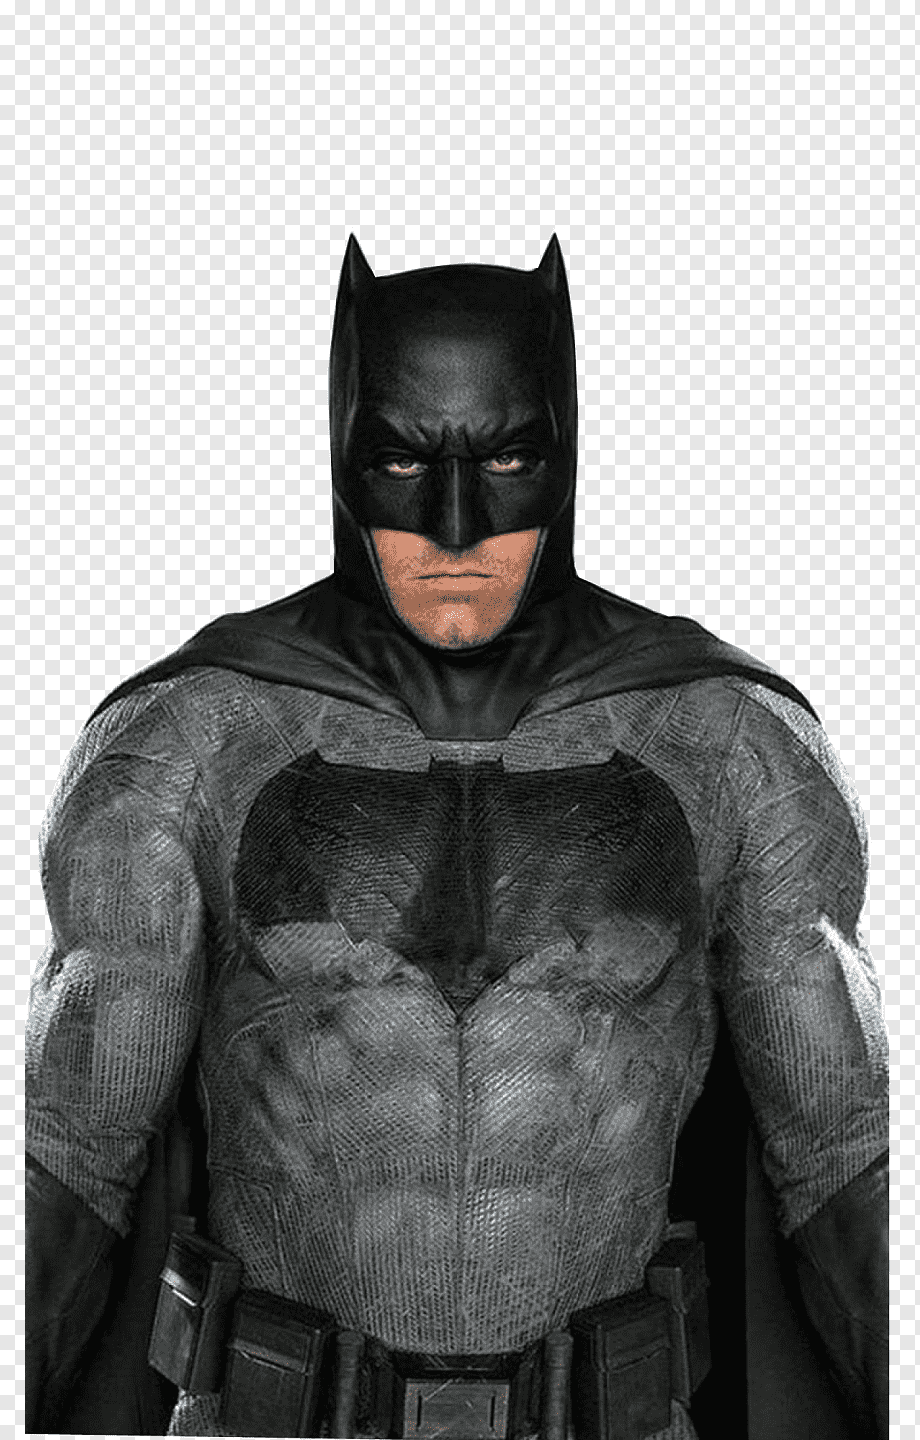 png-transparent-batman-batsuit-costume-film-director-the-dark-knight-returns-ben-affleck-celebrities-superhero-fictional-character.png